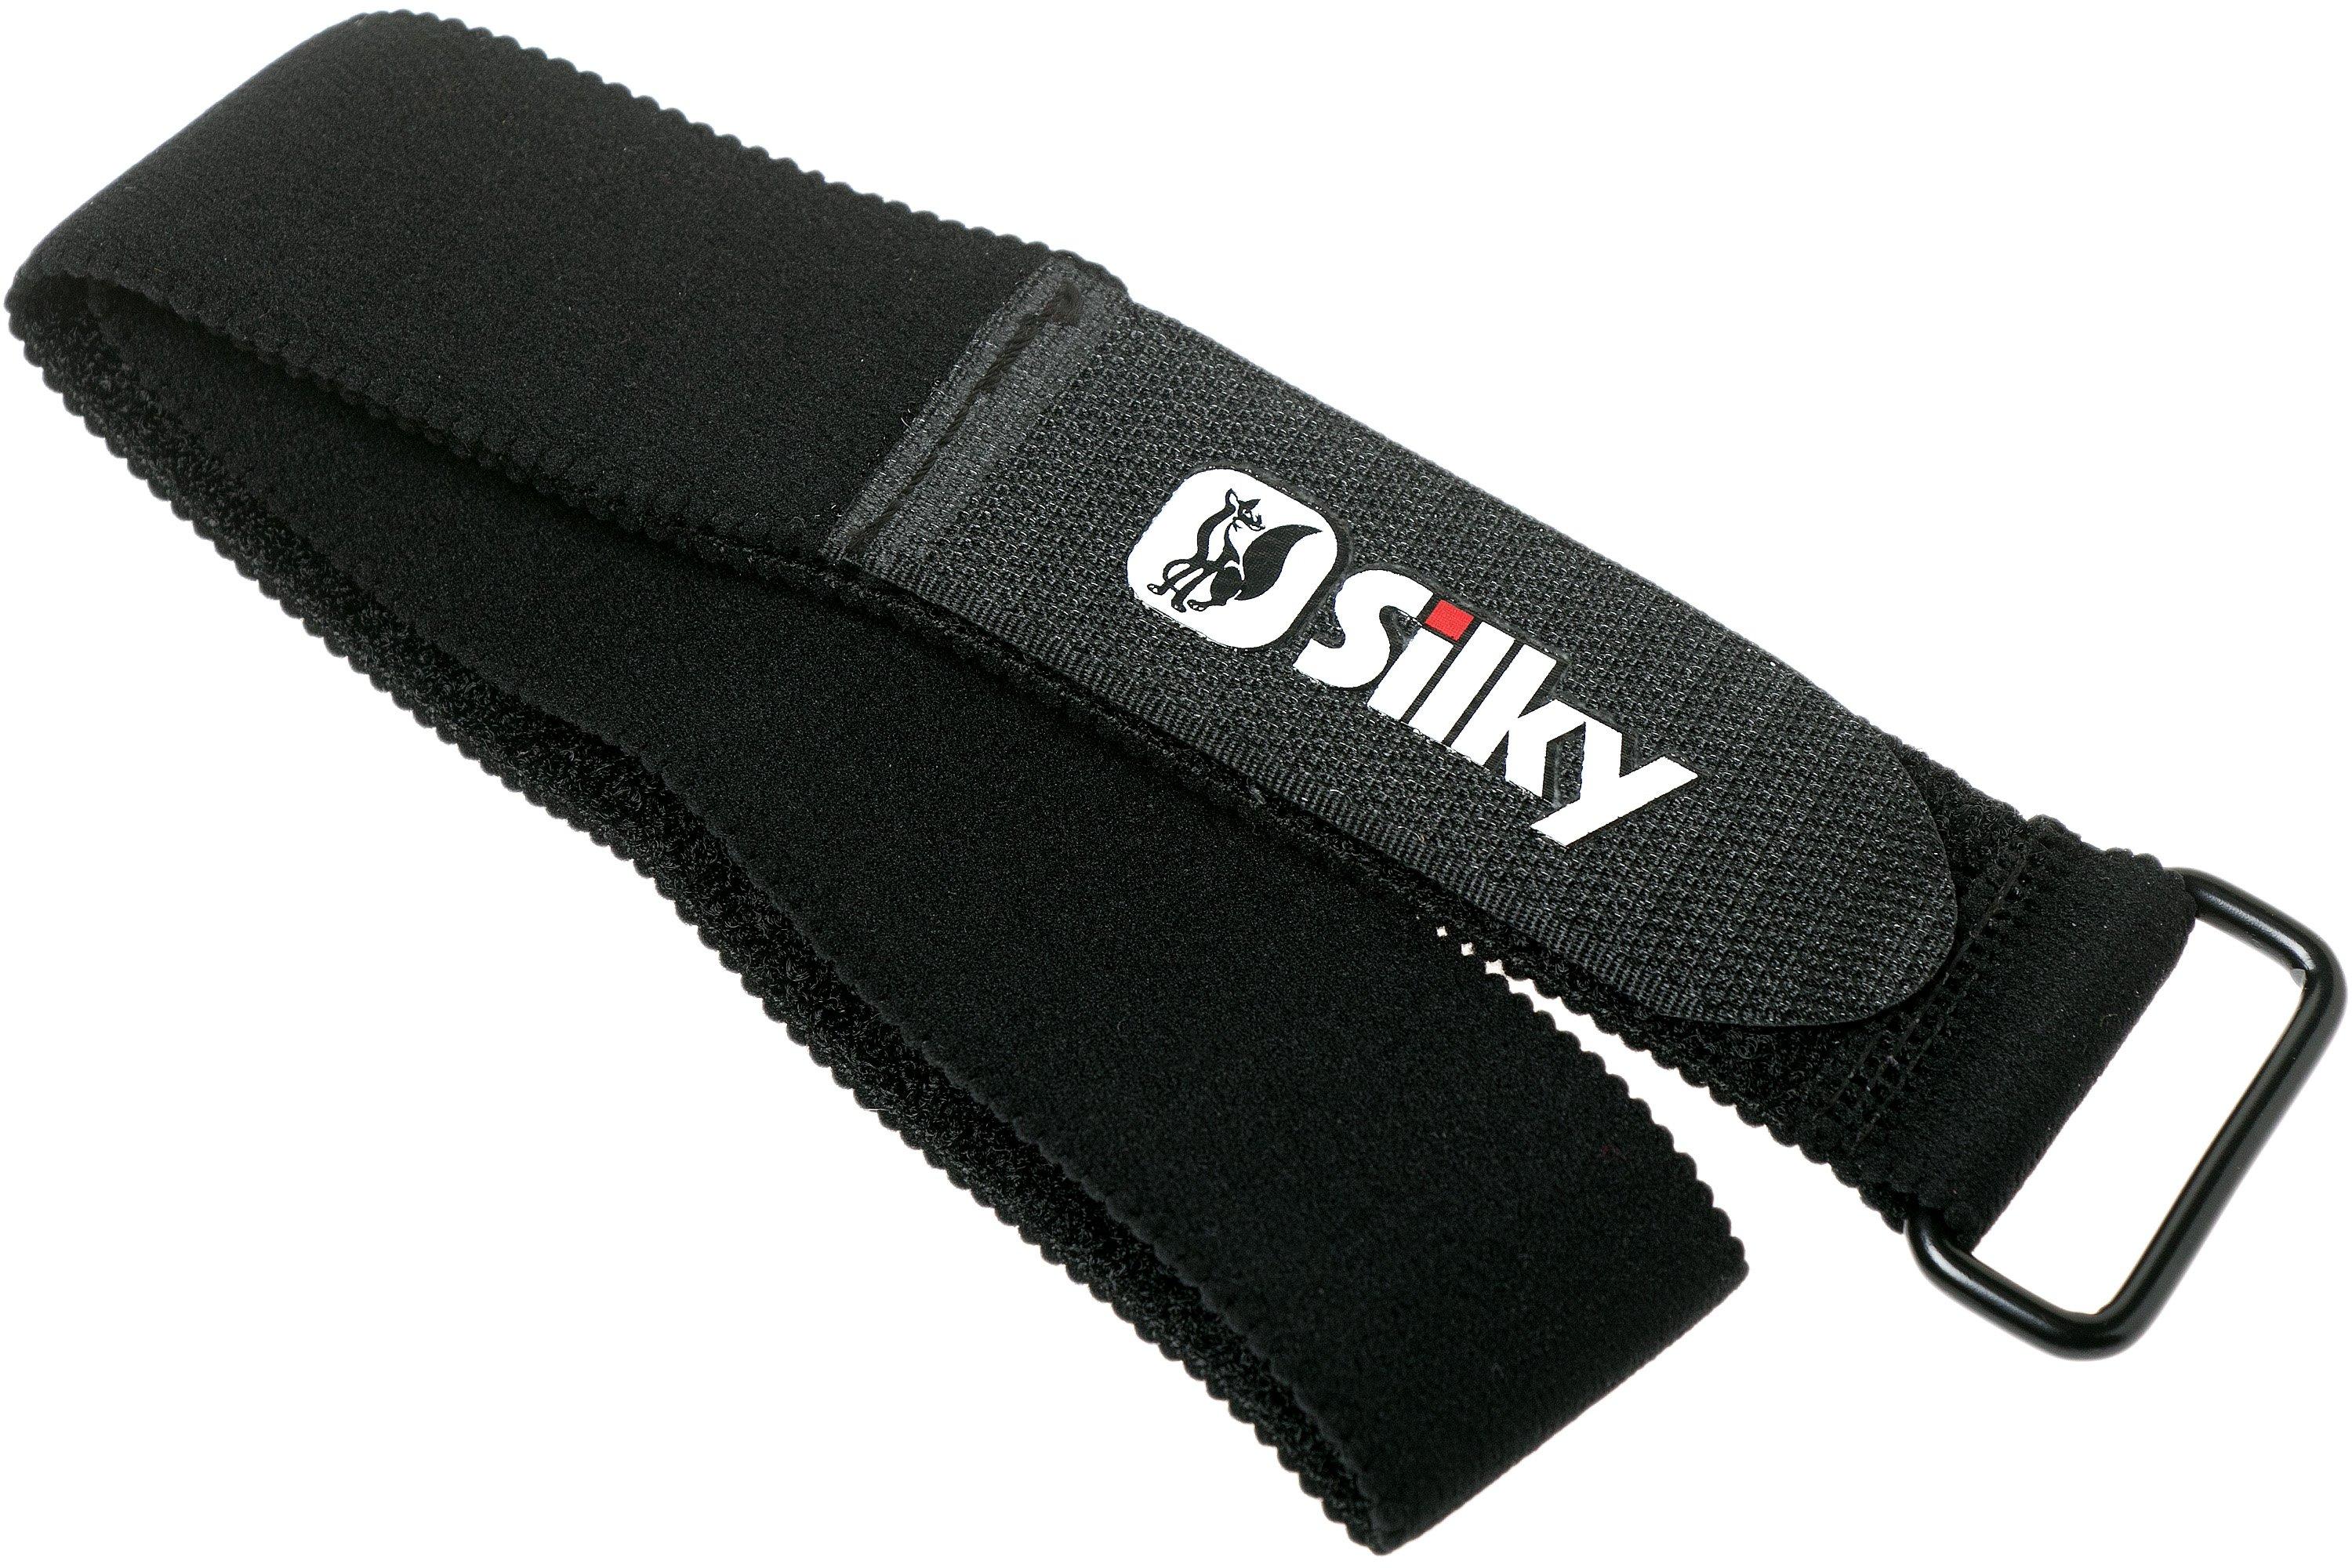 Silky Elastic Velcro Leg Straps, Pair